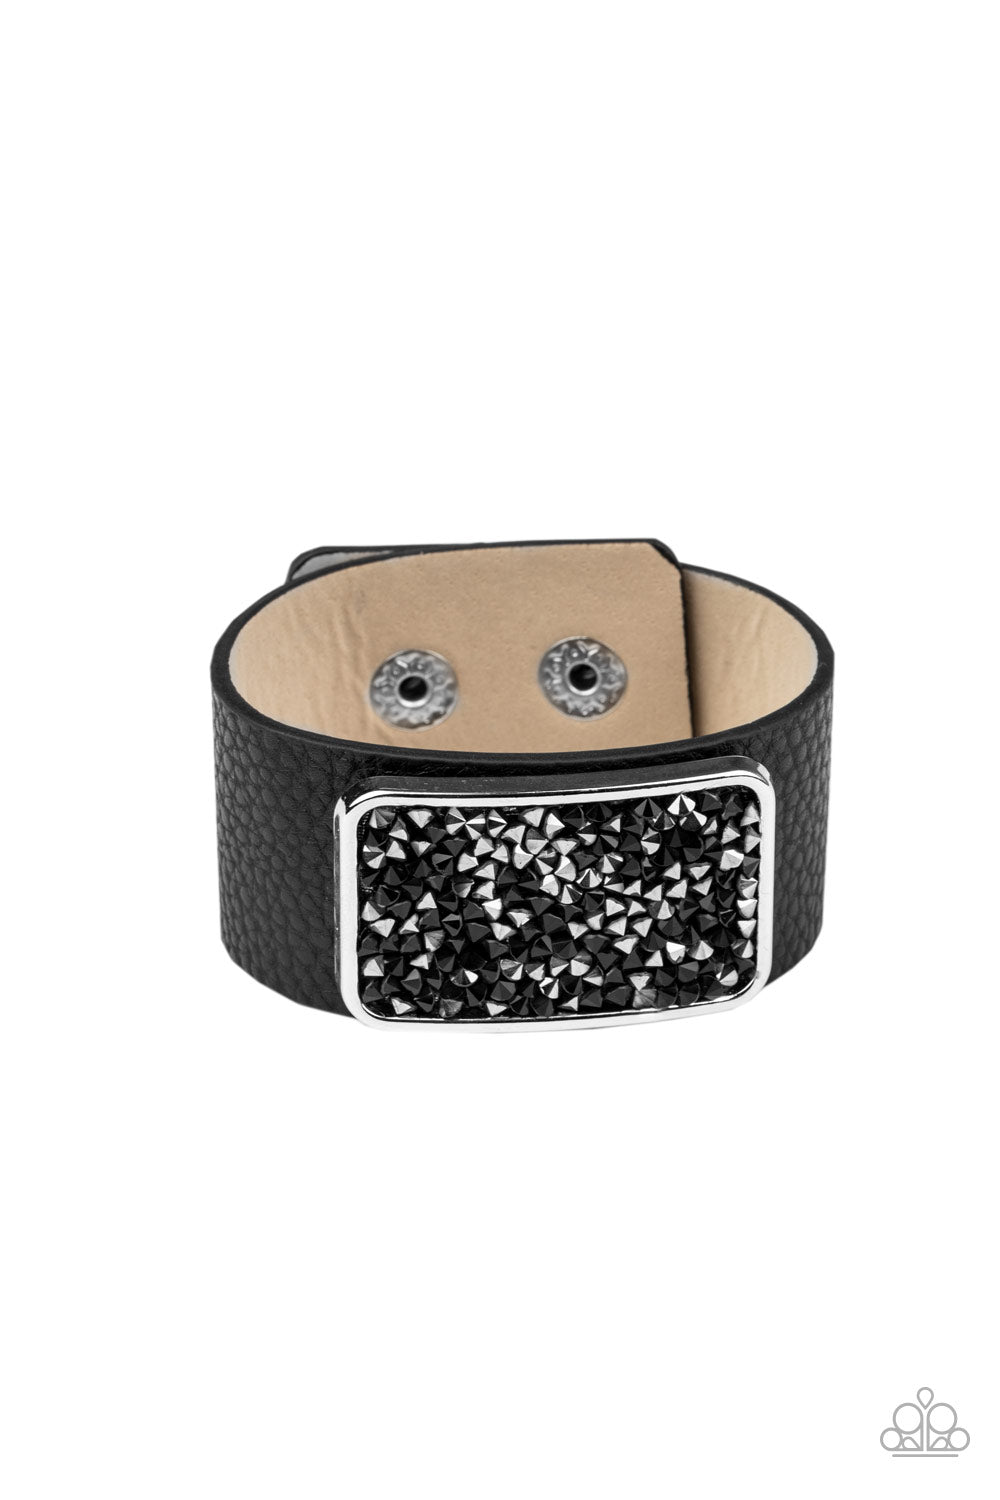 Interstellar Shimmer Bracelet - Black